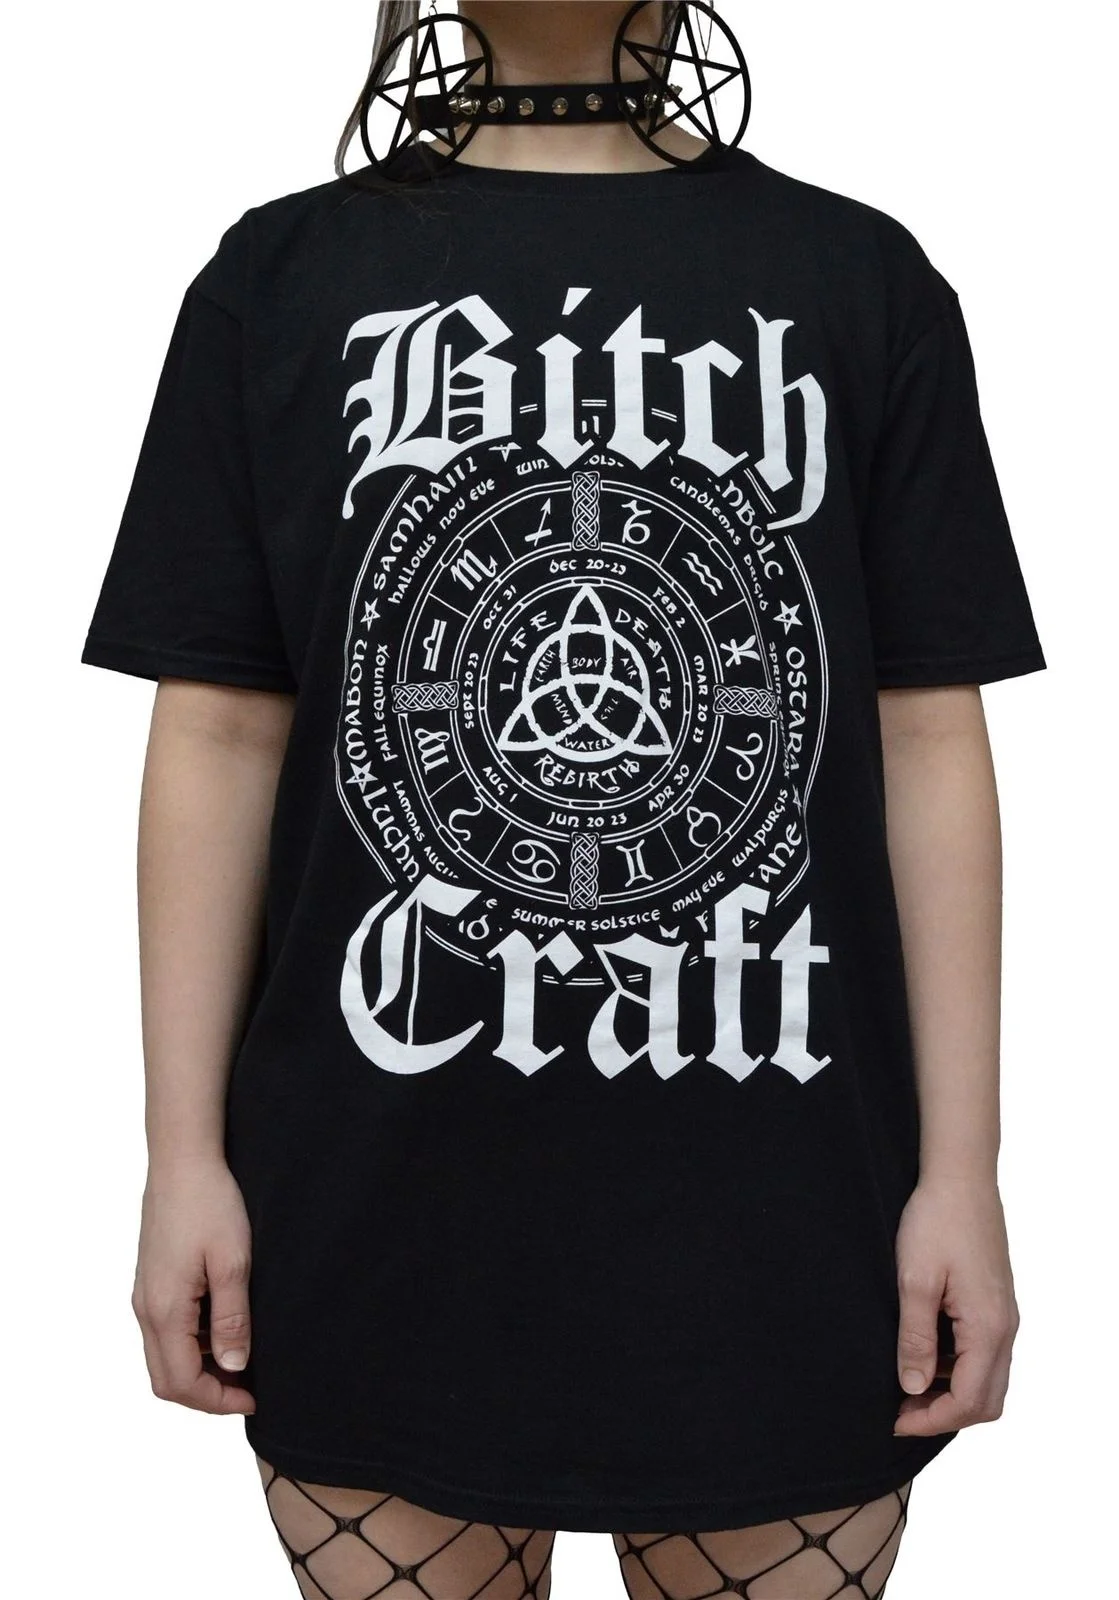 Pudo YF Luna Kult Prasica Obrti Gothic T-Shirt Withcraft Grunge Black Tee Oversize Satanic Majica Halloween Oblačila